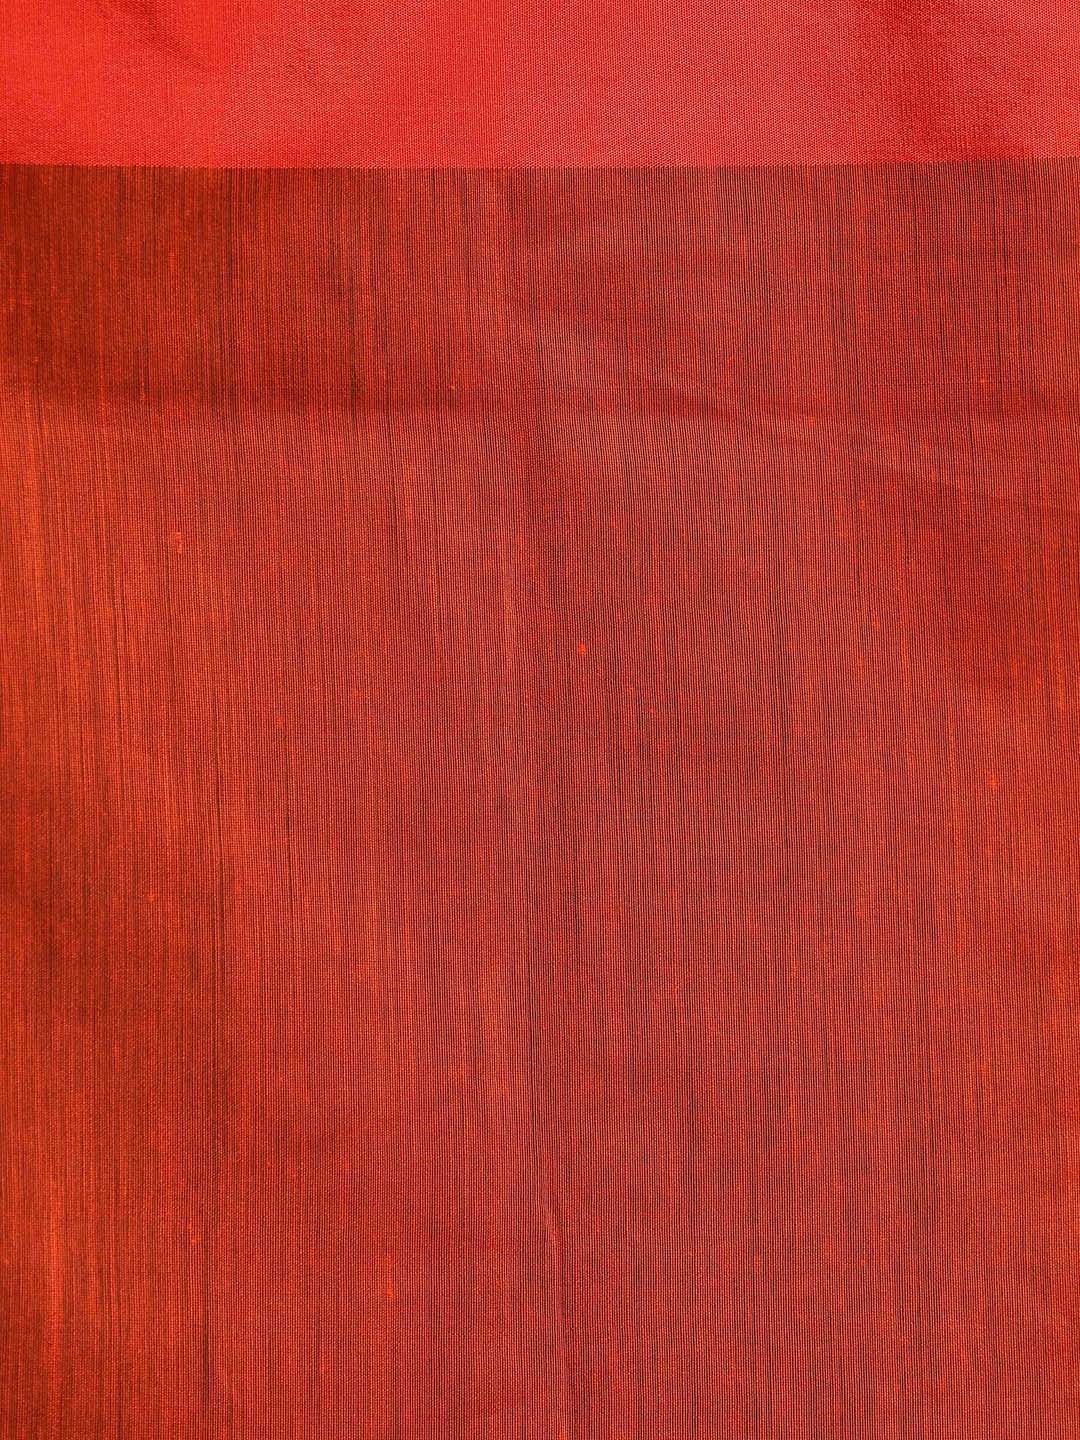 Indethnic Orange and Black Solid Colour Blocked Saree - Saree Detail View